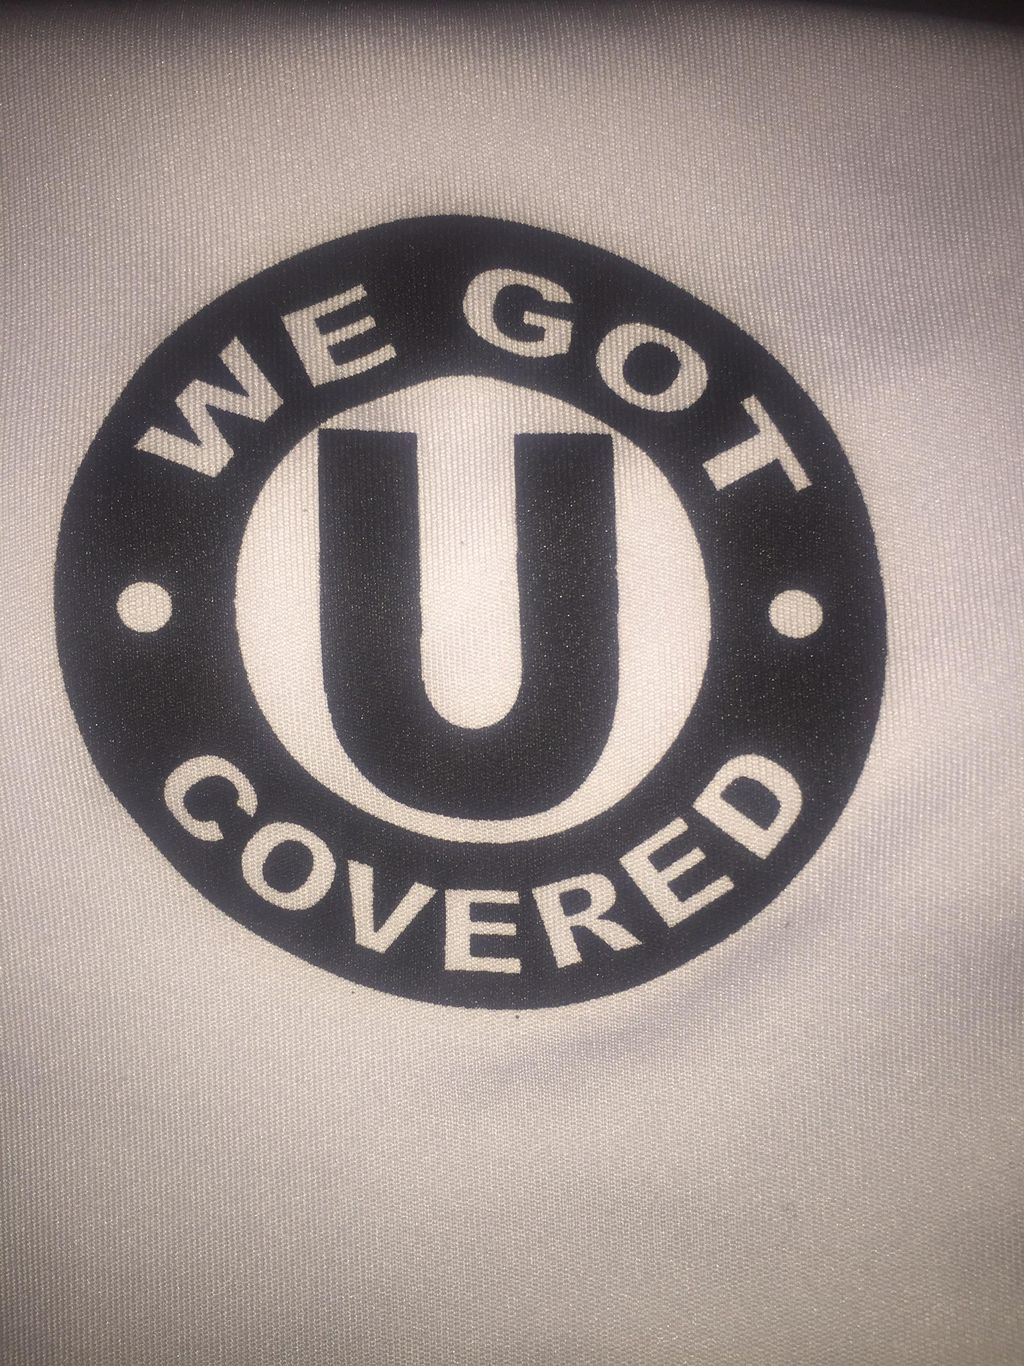 We Got U Covered